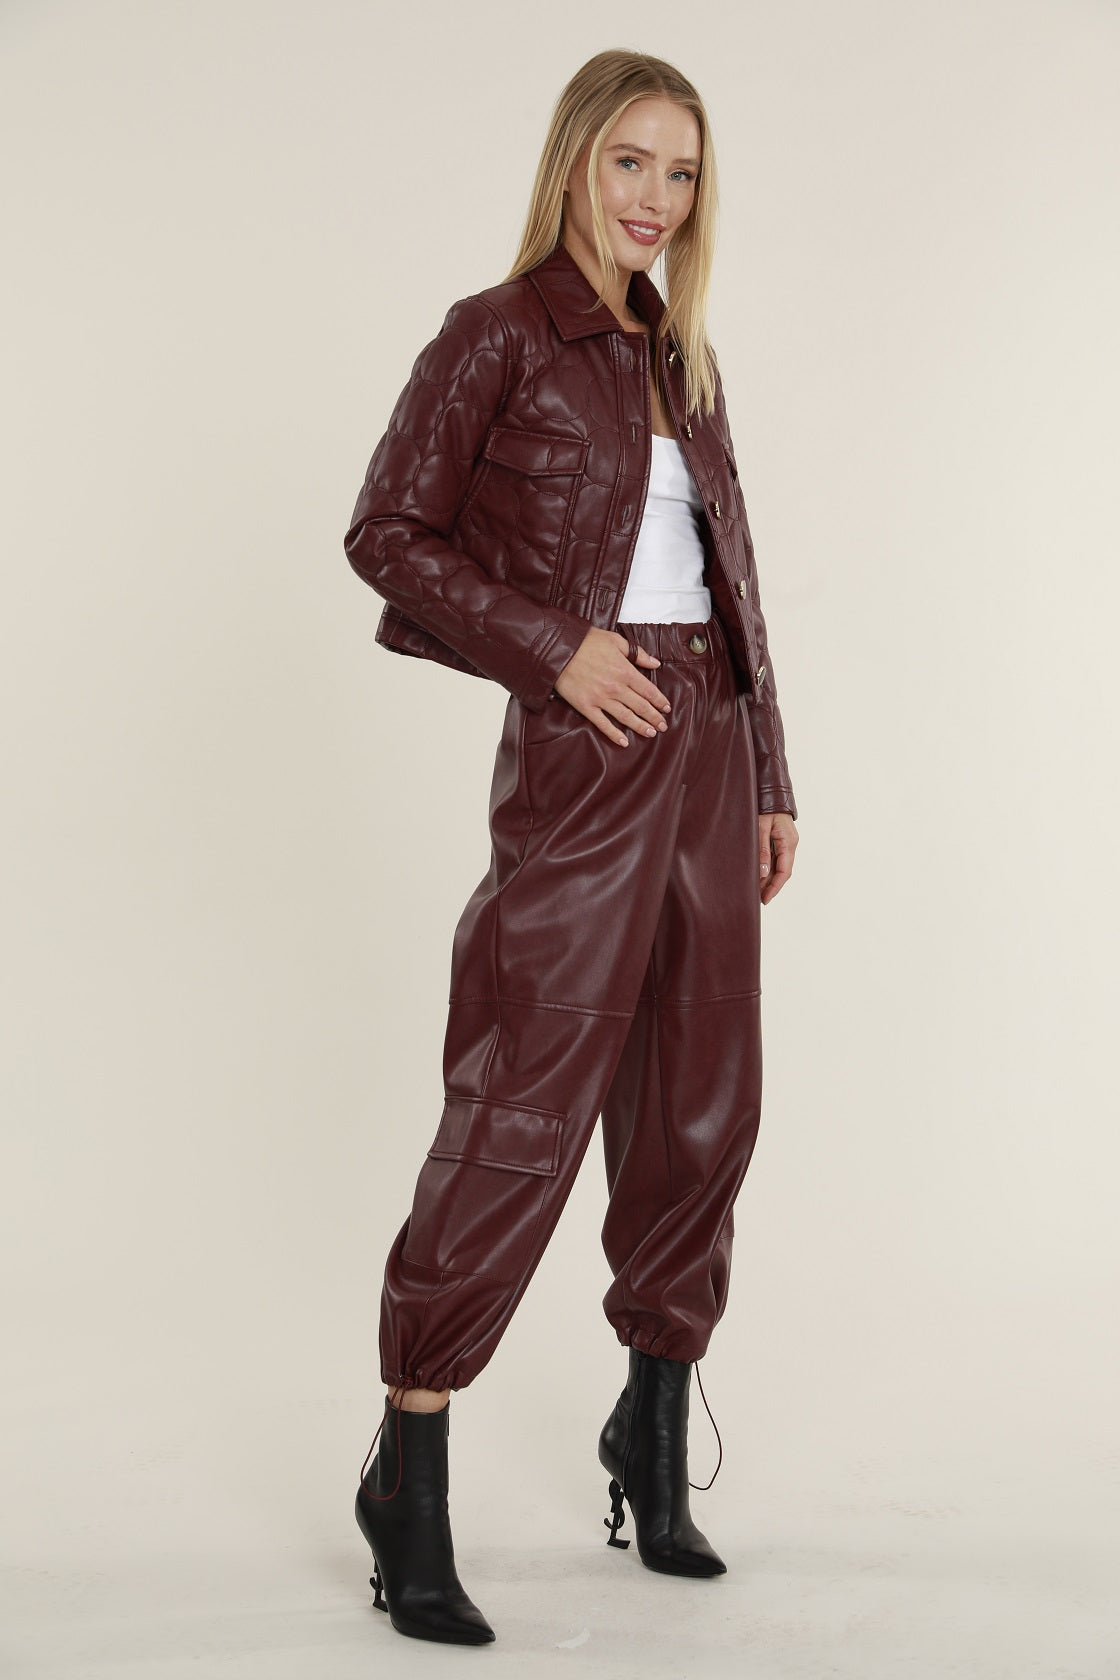 wybzd Women PU Leather Pencil Pants High Waist Zipper Leggings Slim Fit  Bodycon Trousers Wine Red XL - Walmart.com